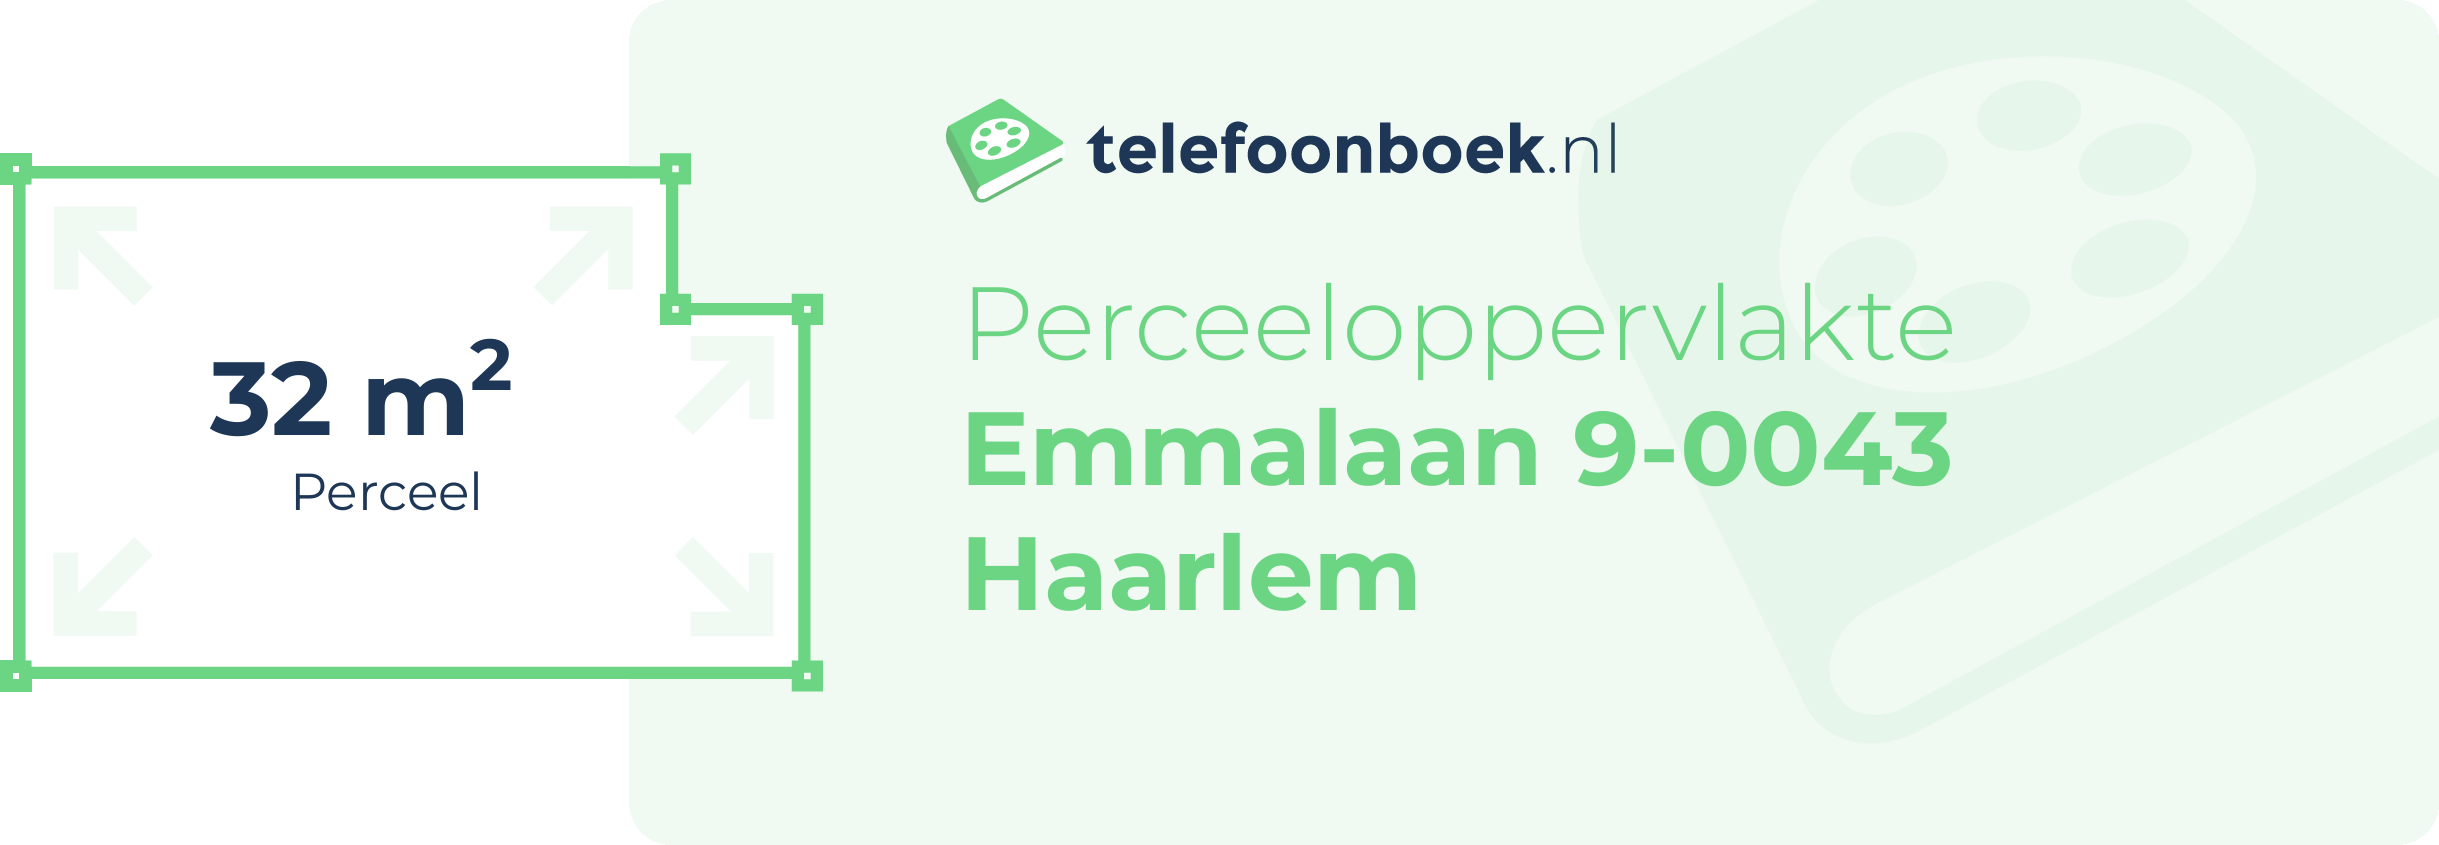 Perceeloppervlakte Emmalaan 9-0043 Haarlem